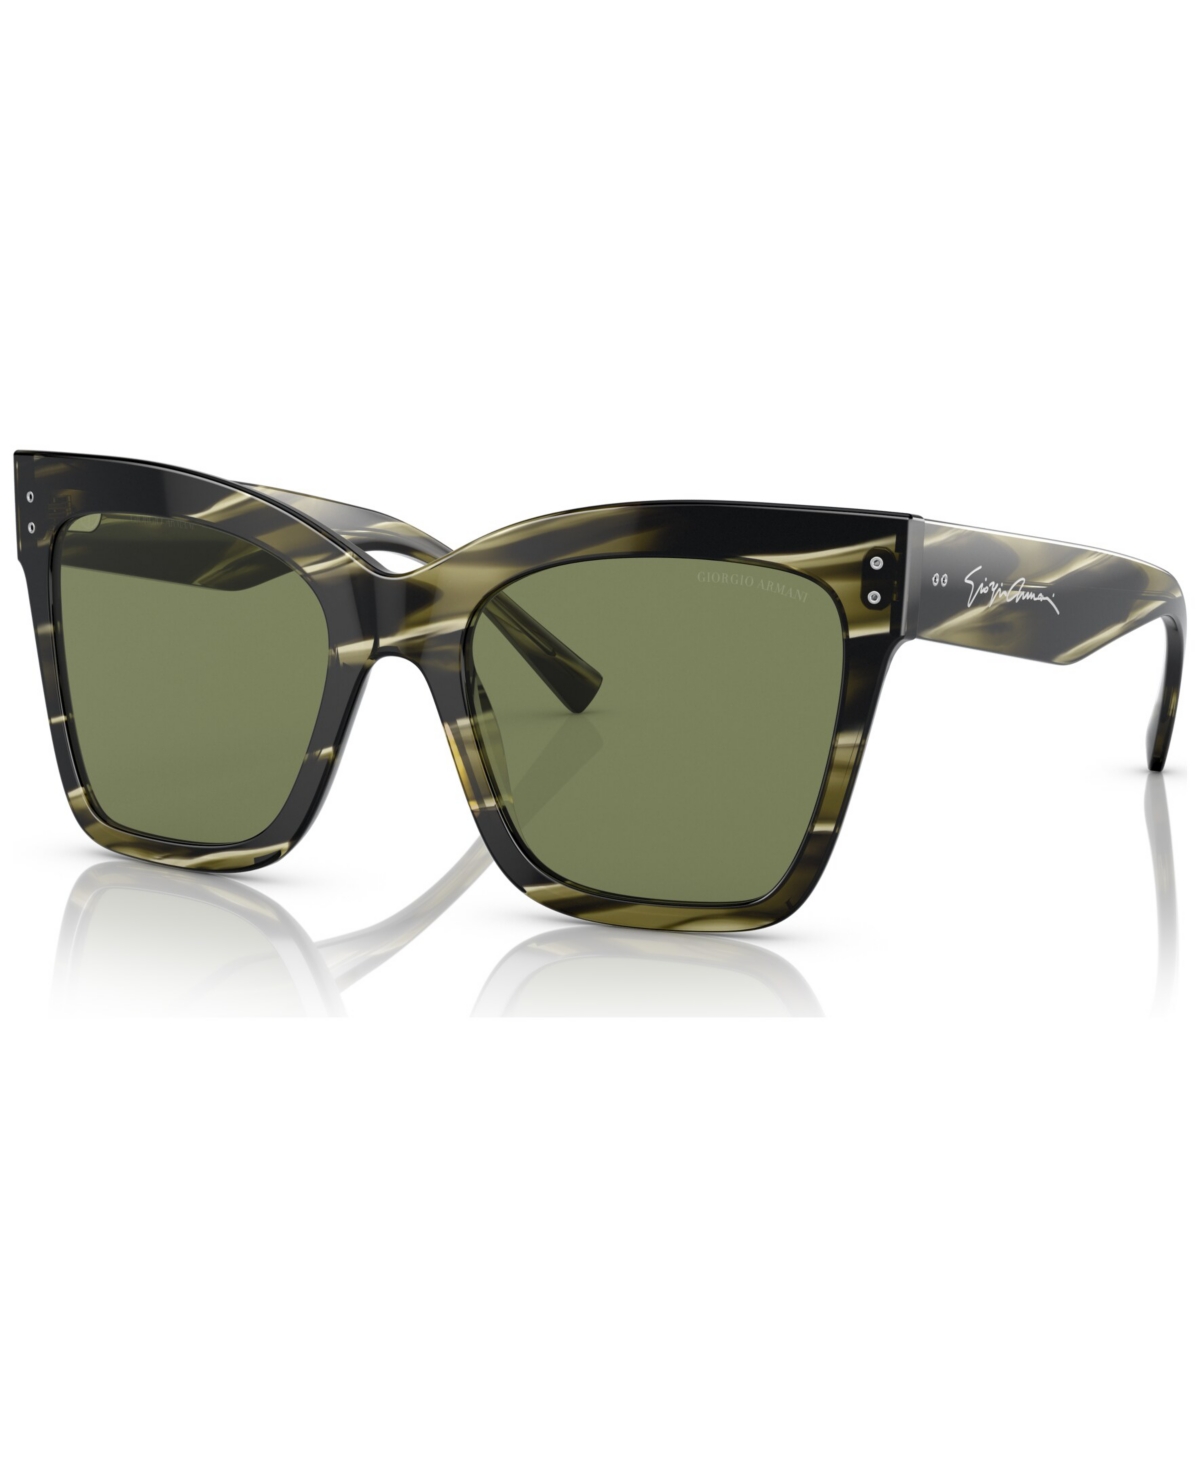 Women's Sunglasses, AR8175 - Striped Green